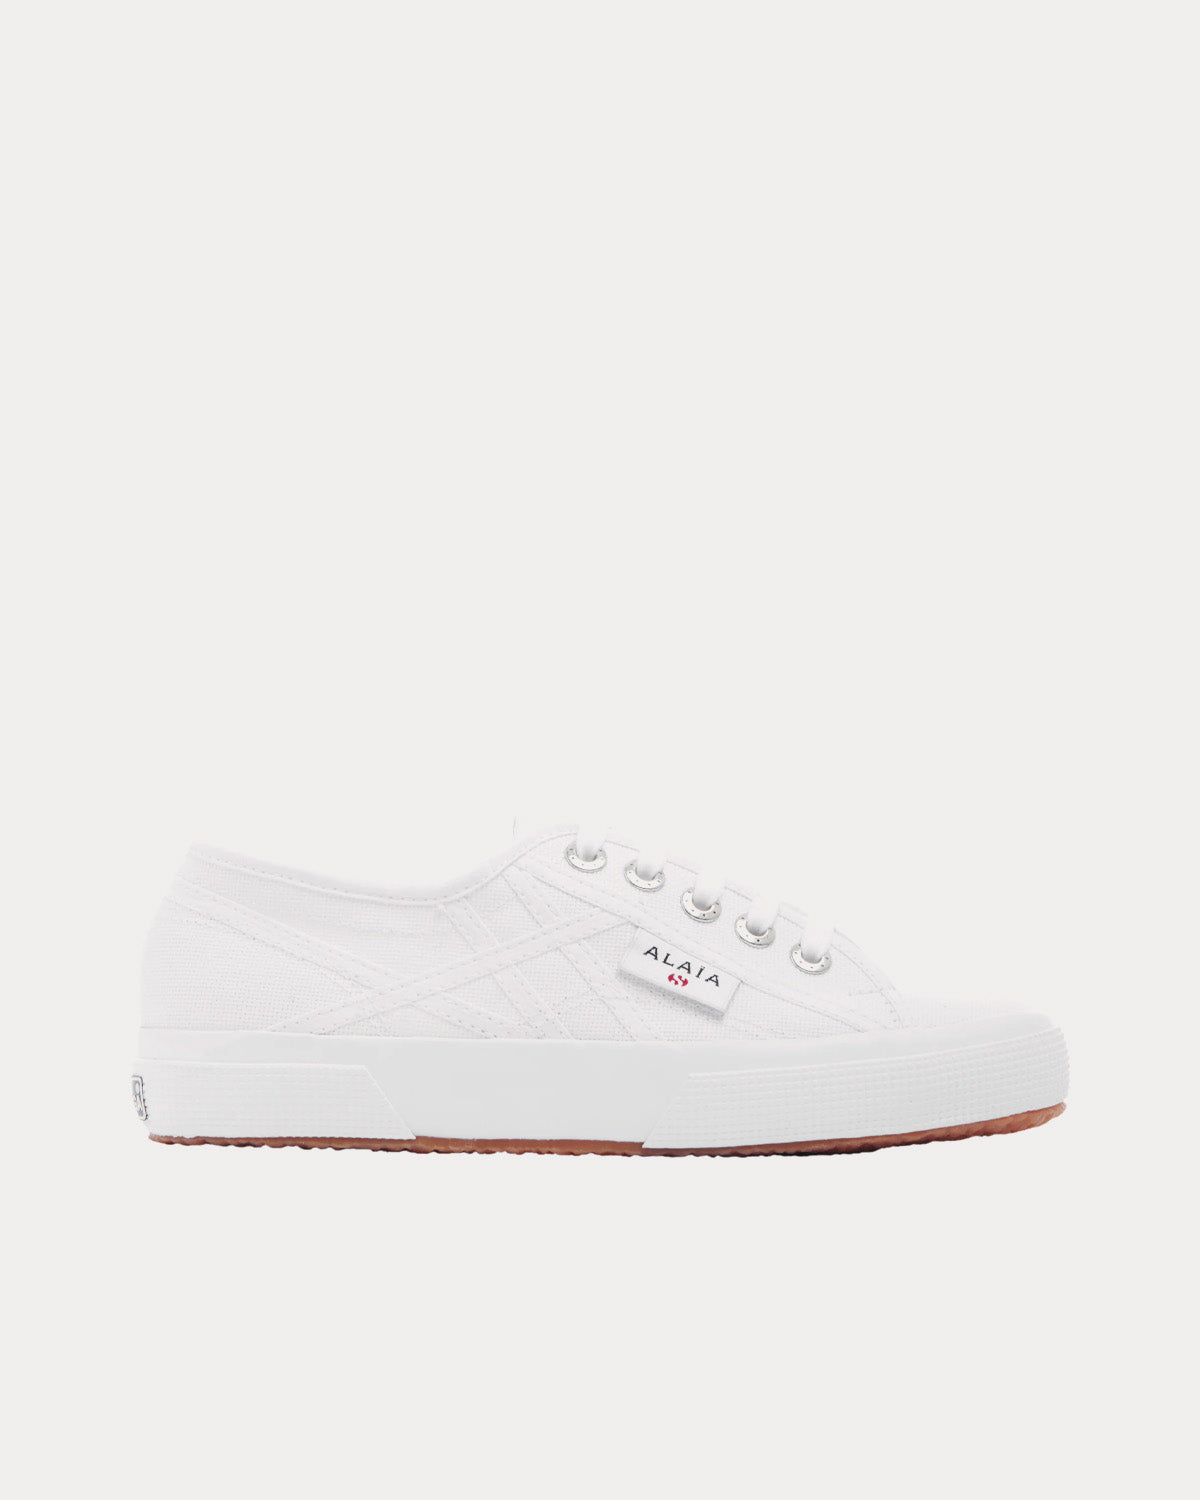 Alaïa x Superga - Leather White Low Top Sneakers